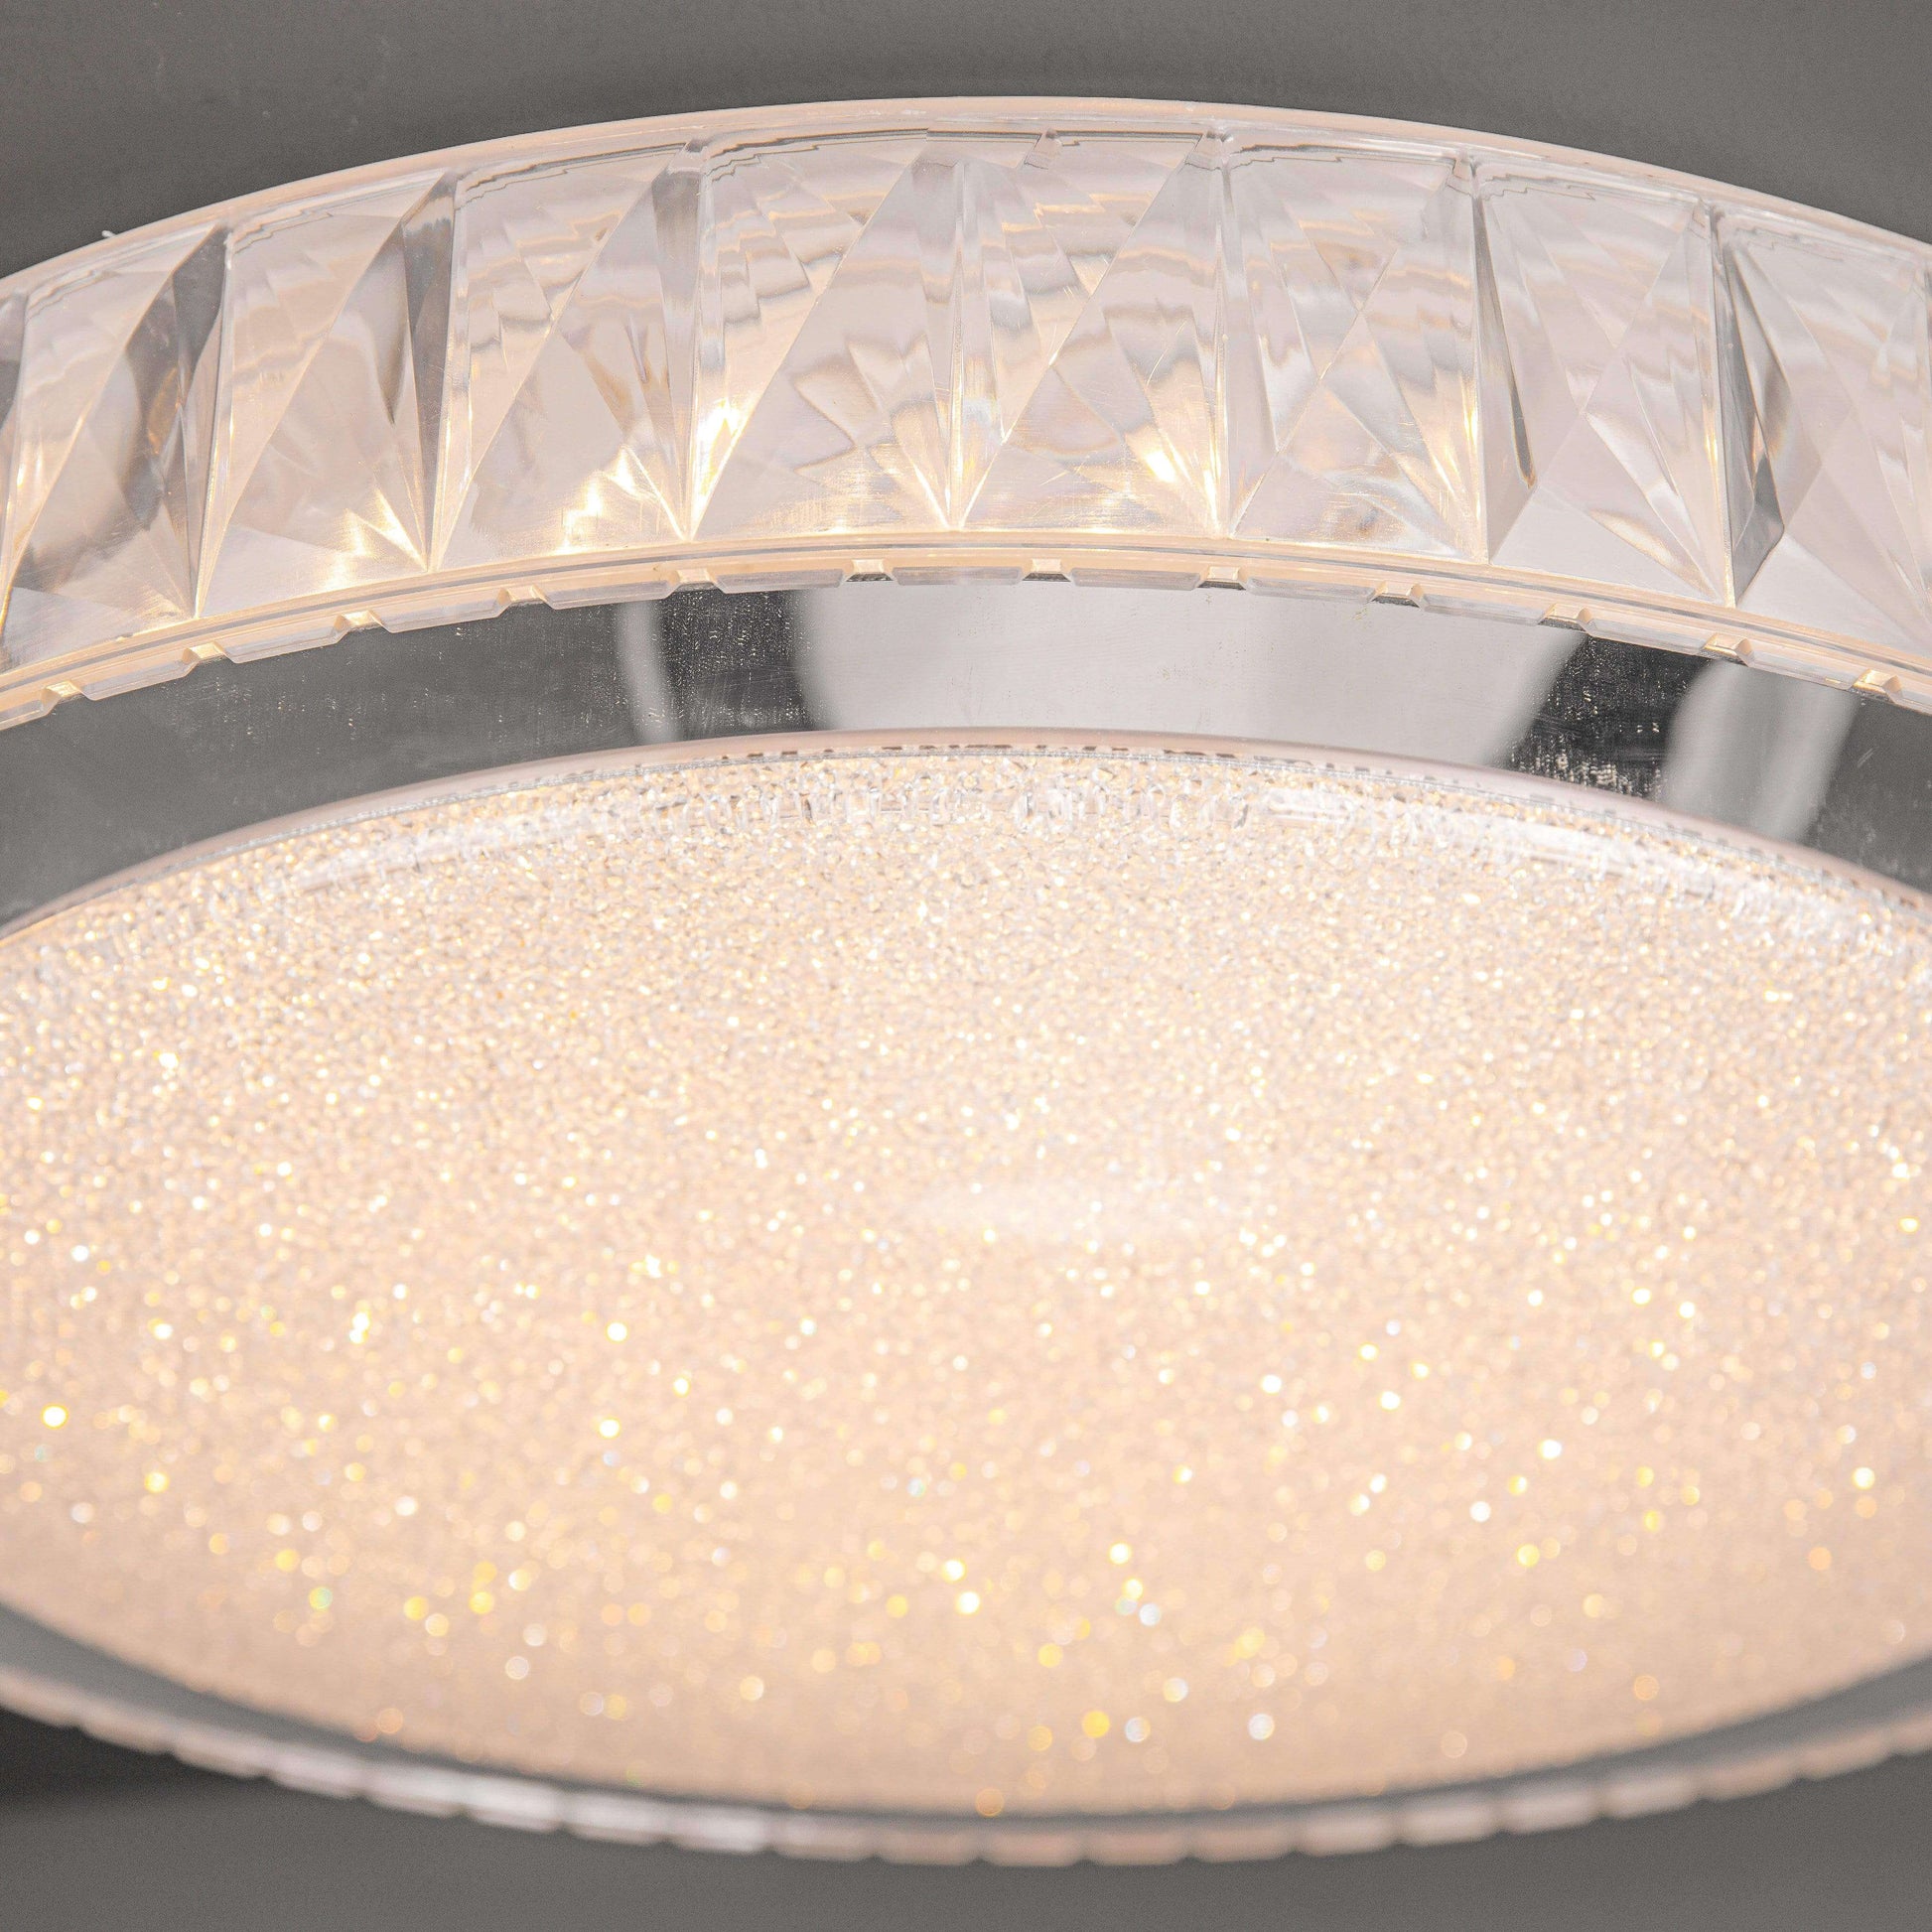 Lights  -  Akelia Acrylic & Stainless Steel Large Flush Led Ceiling Light  -  50150470